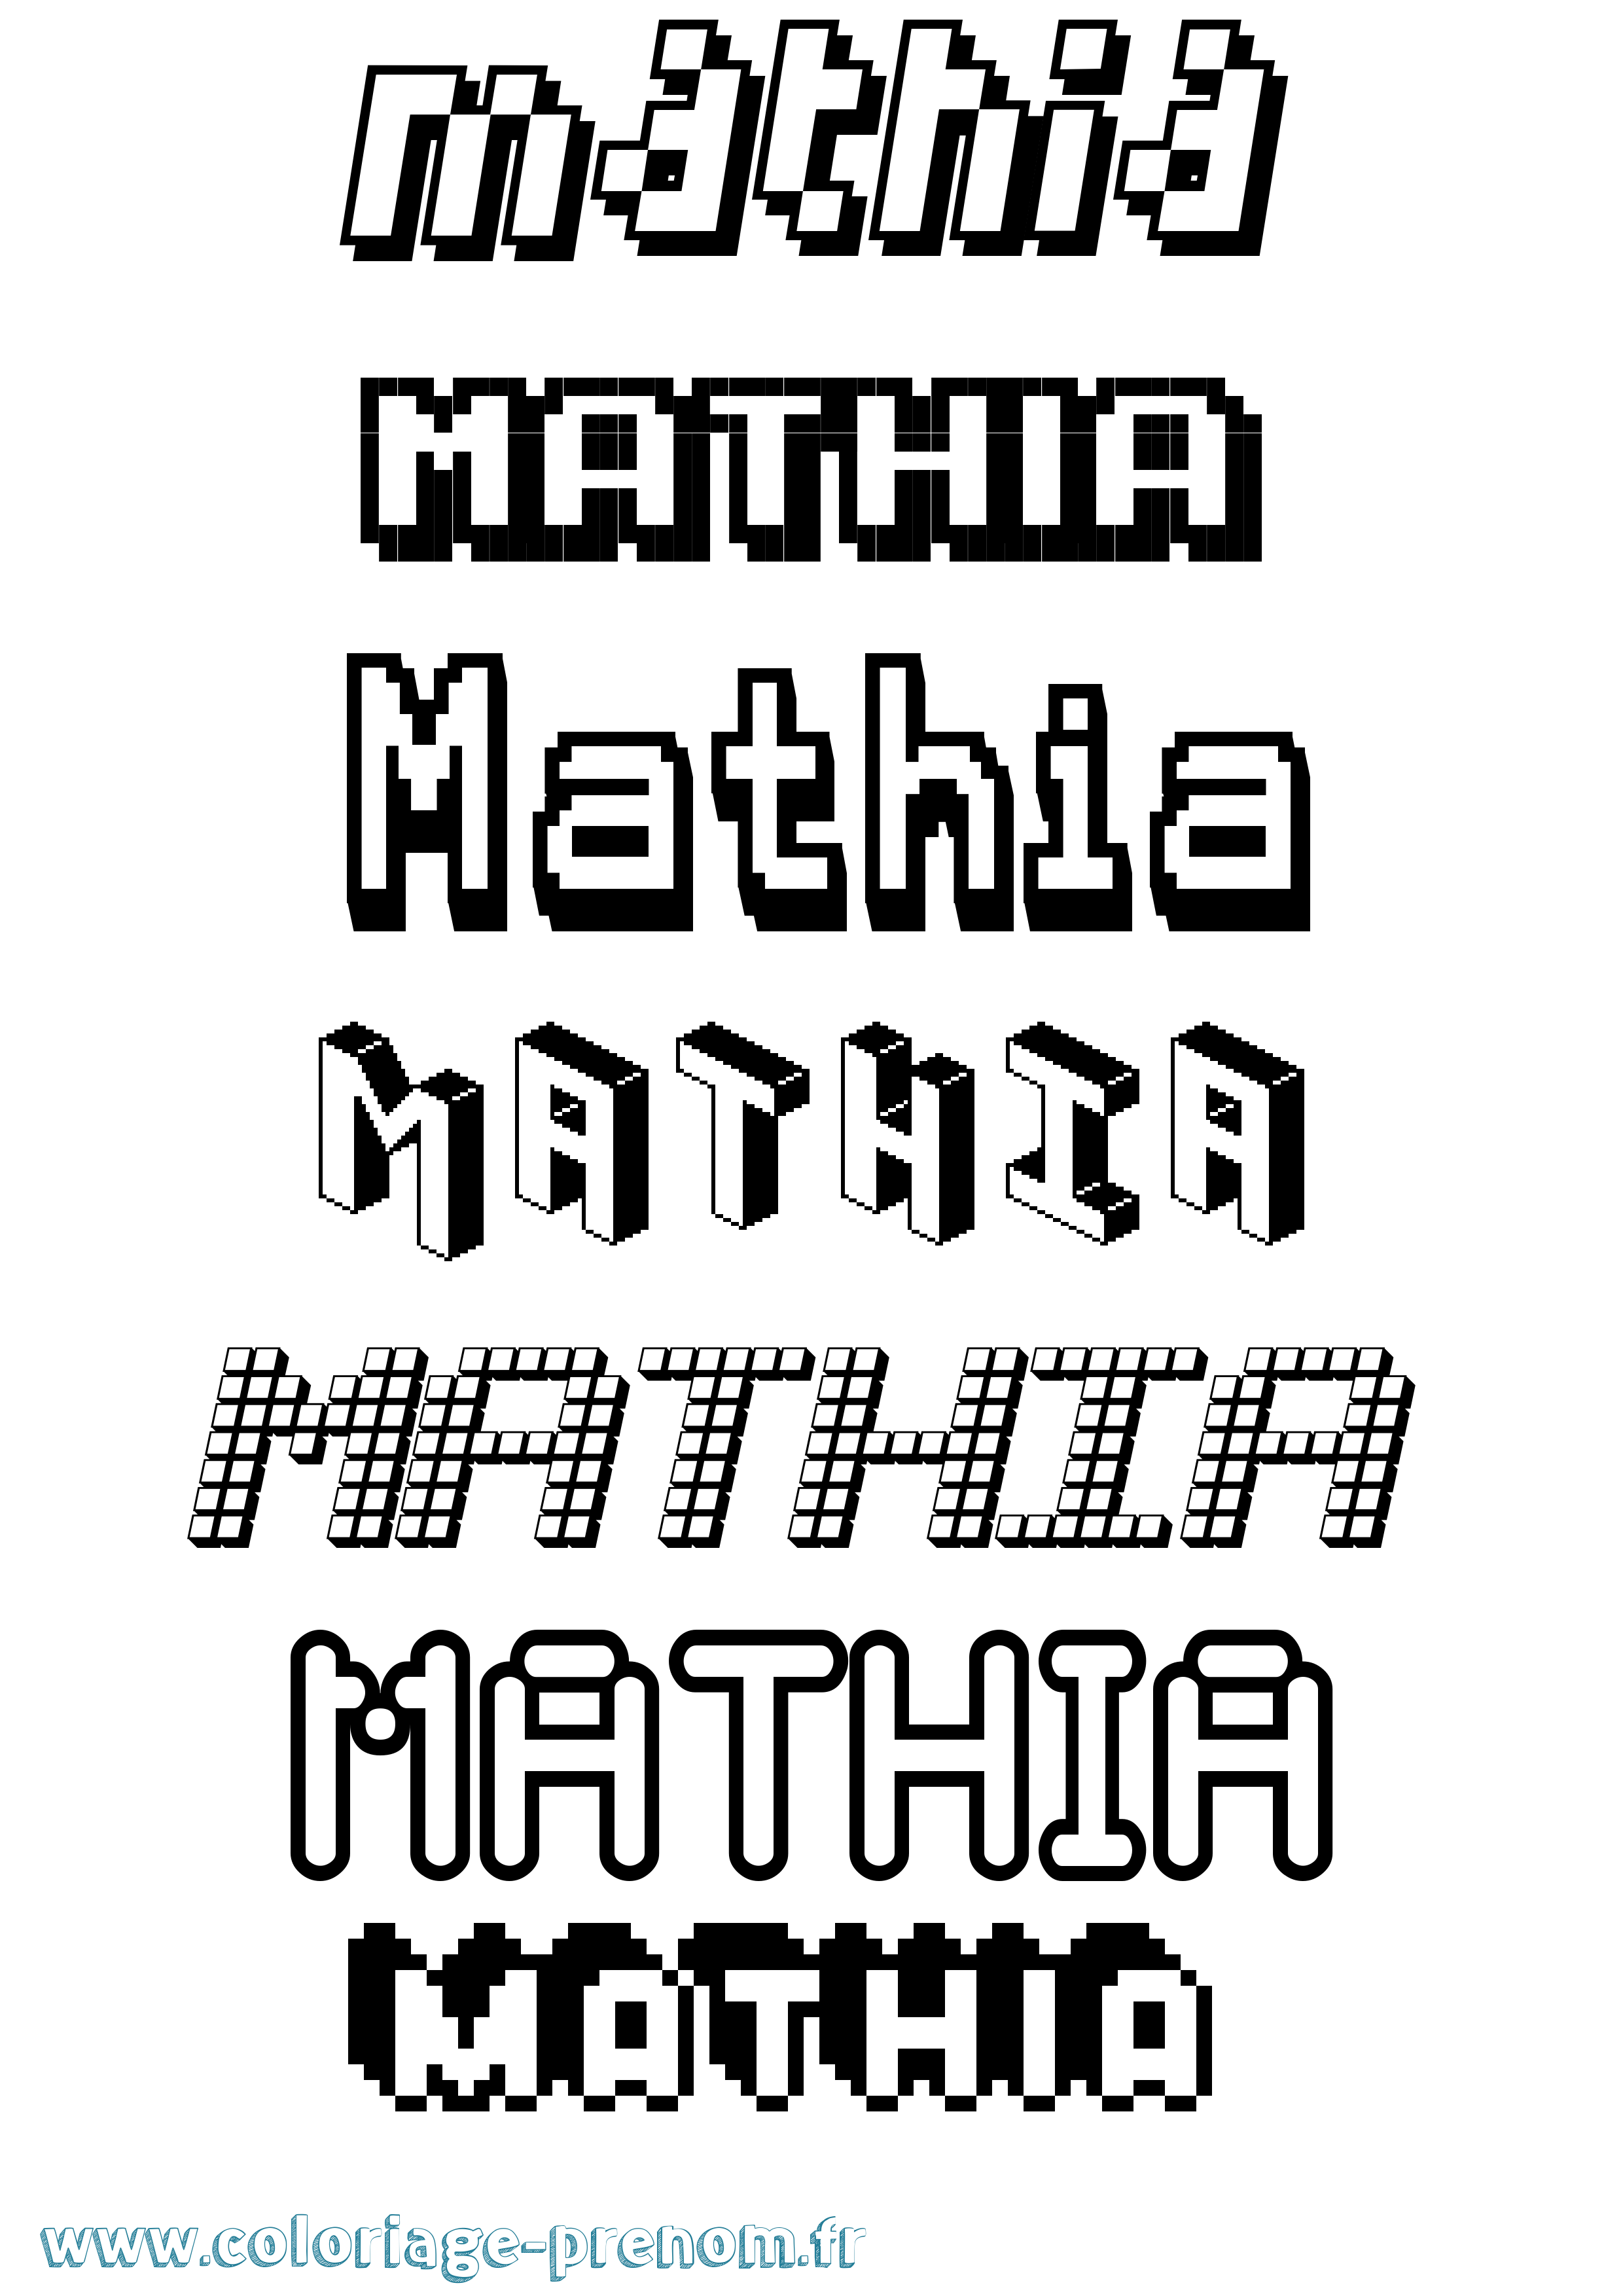 Coloriage prénom Mathia Pixel